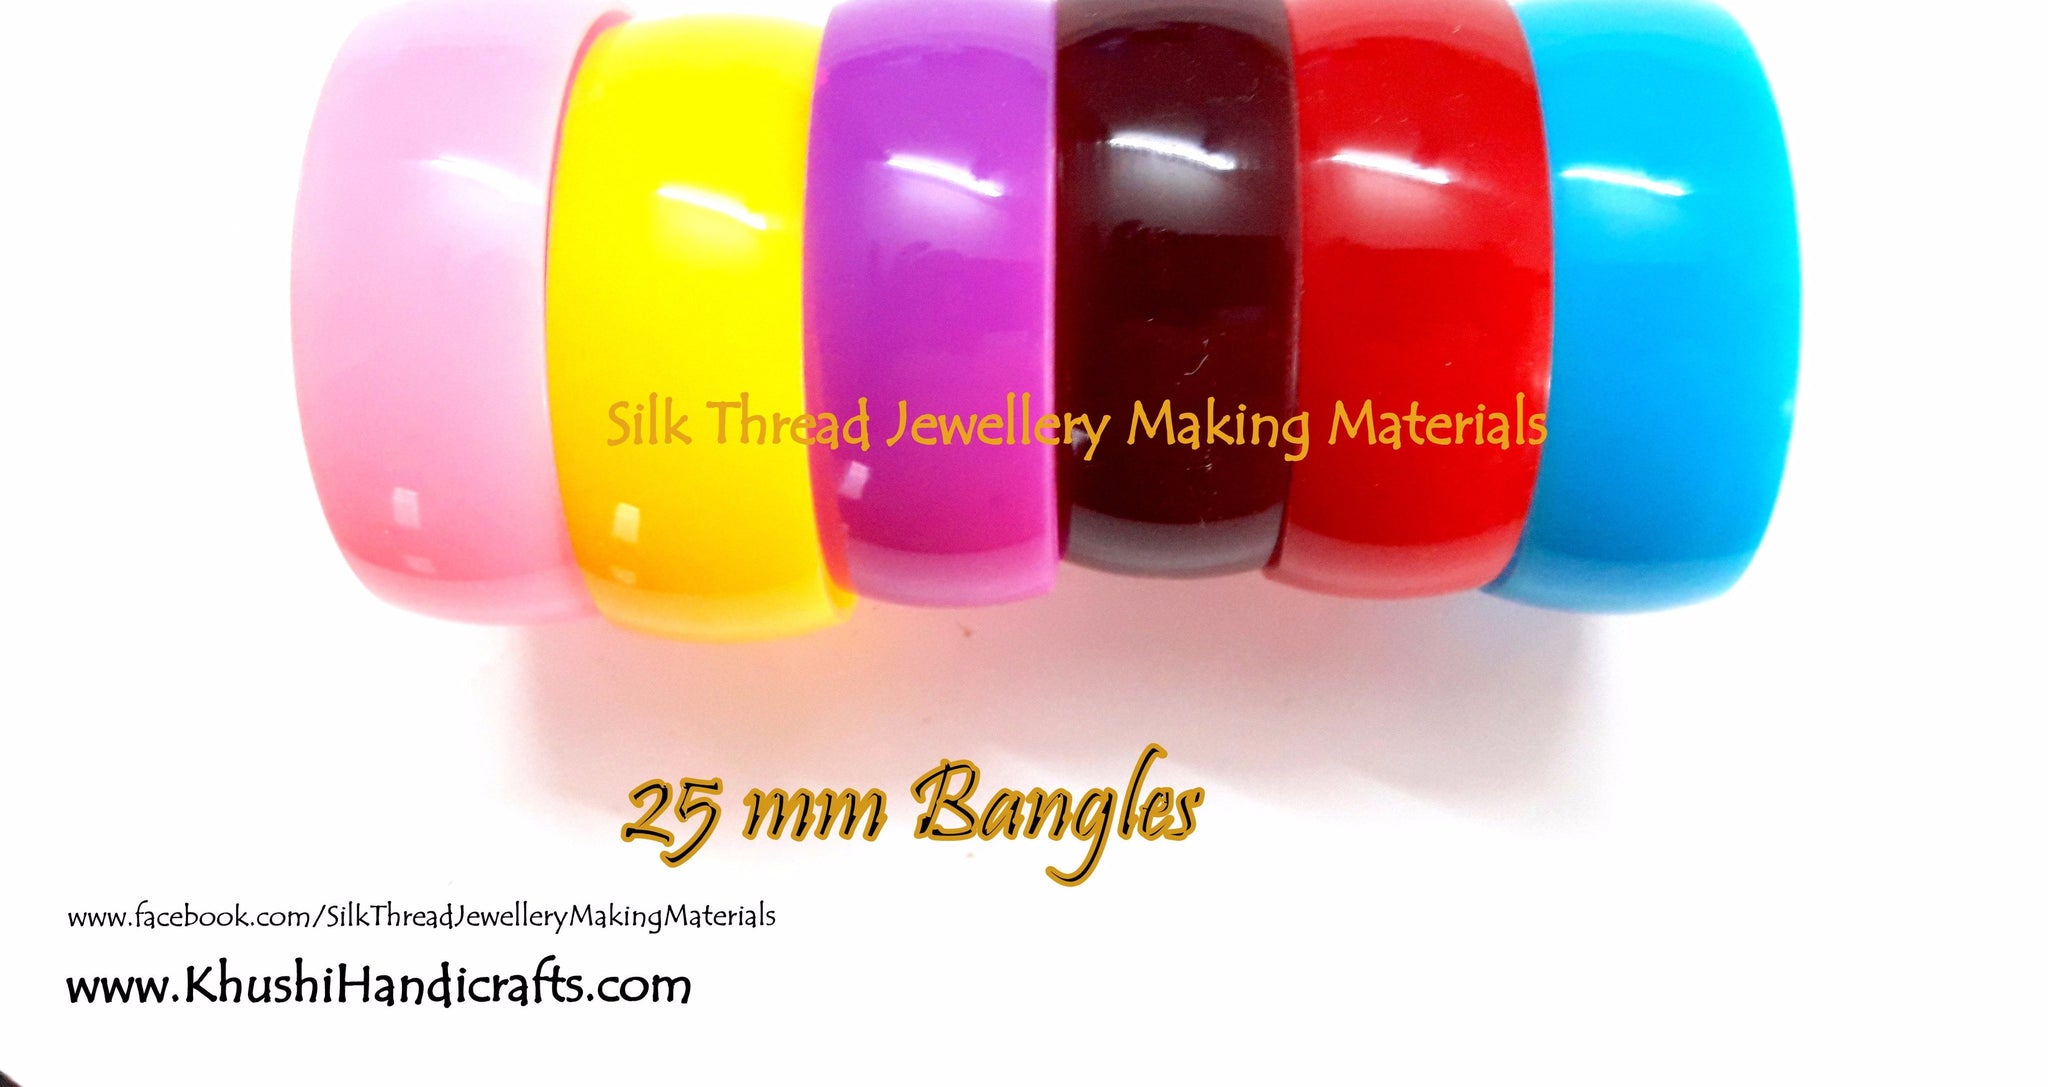 Bangle bases for Silk thread Jewellery